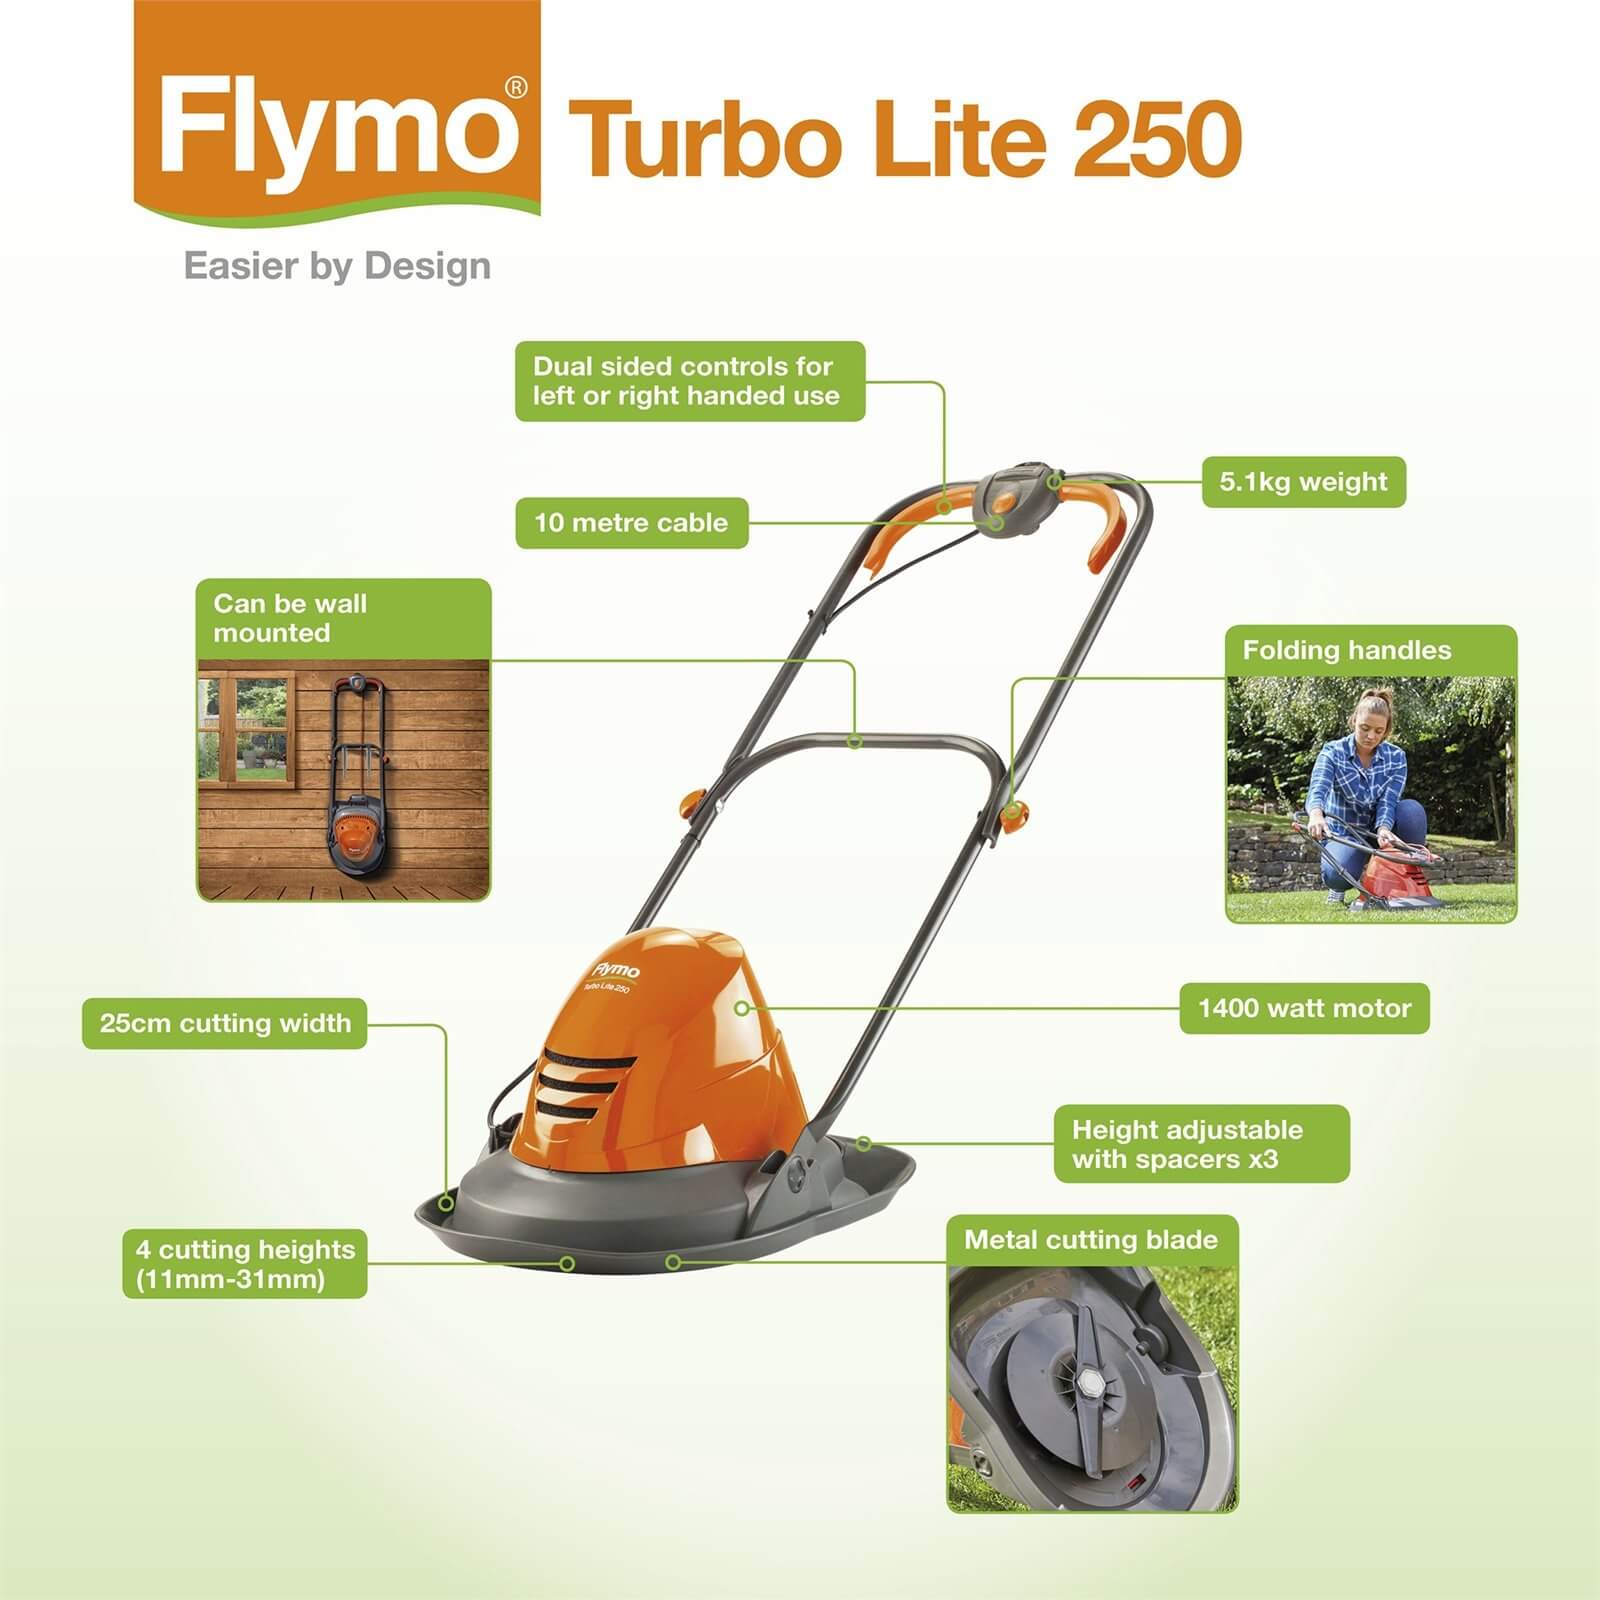 Flymo Turbo Lite 250